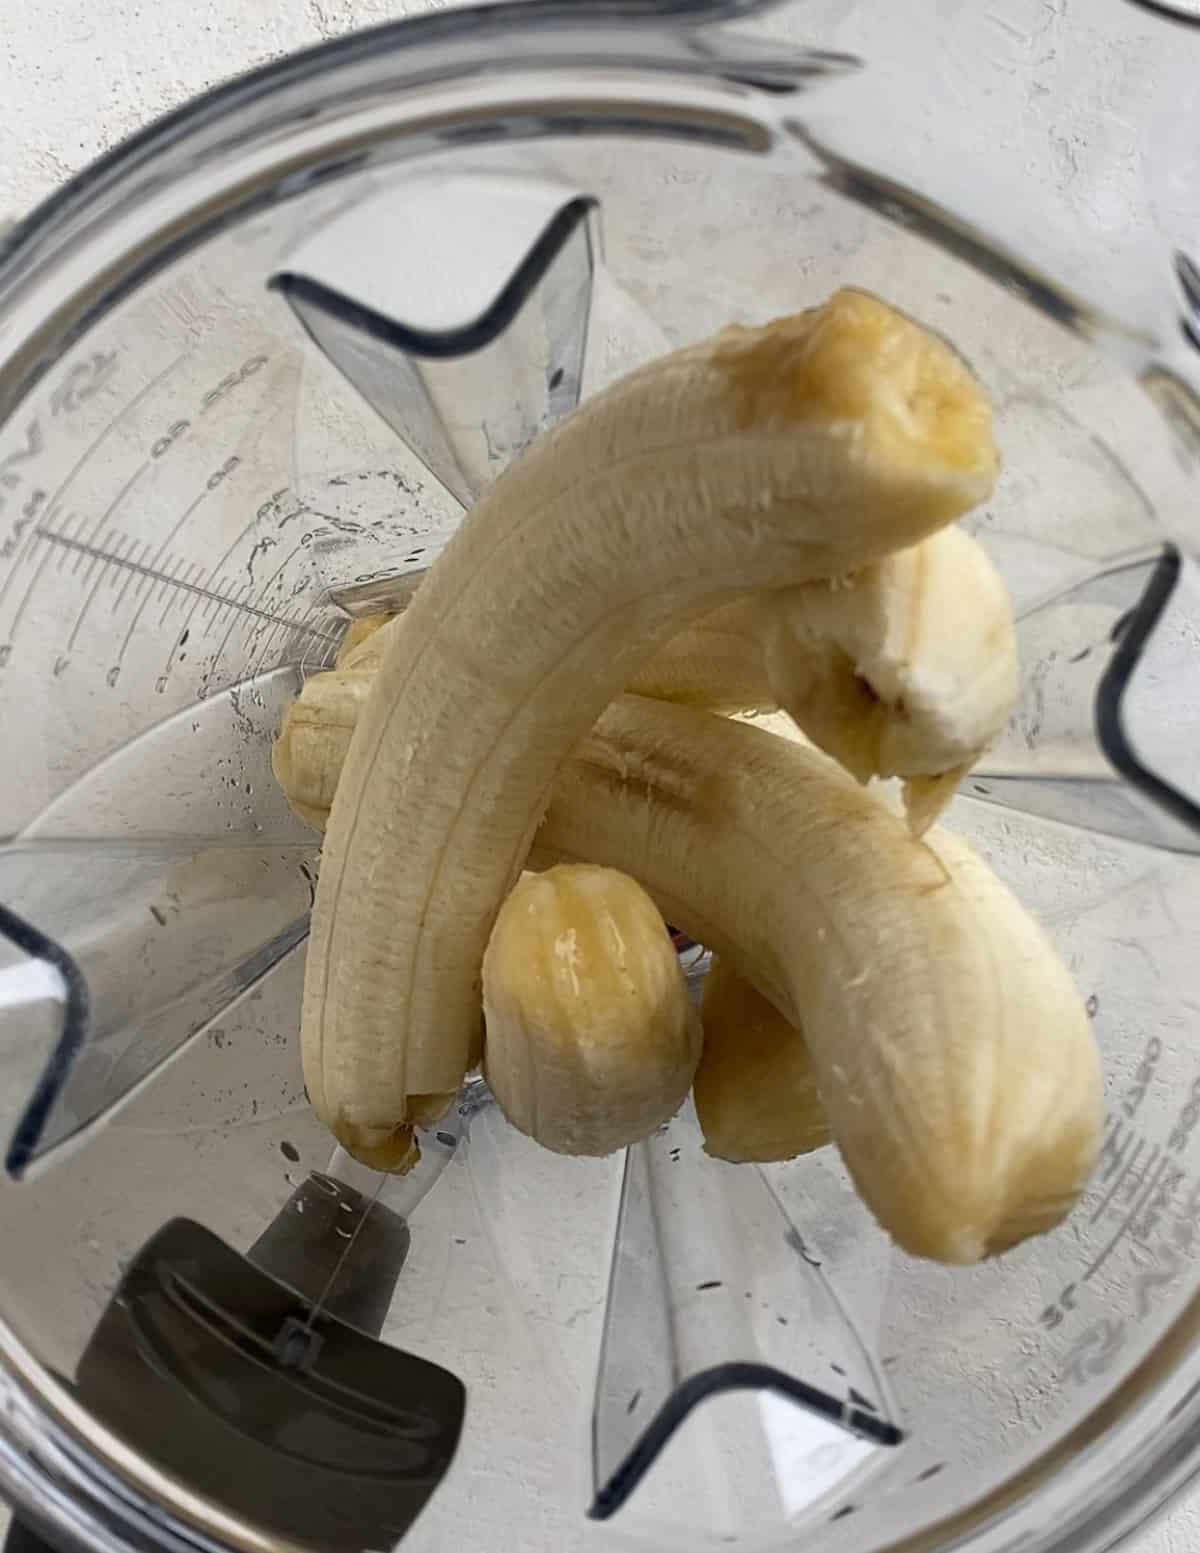 process of adding bananas to belnder